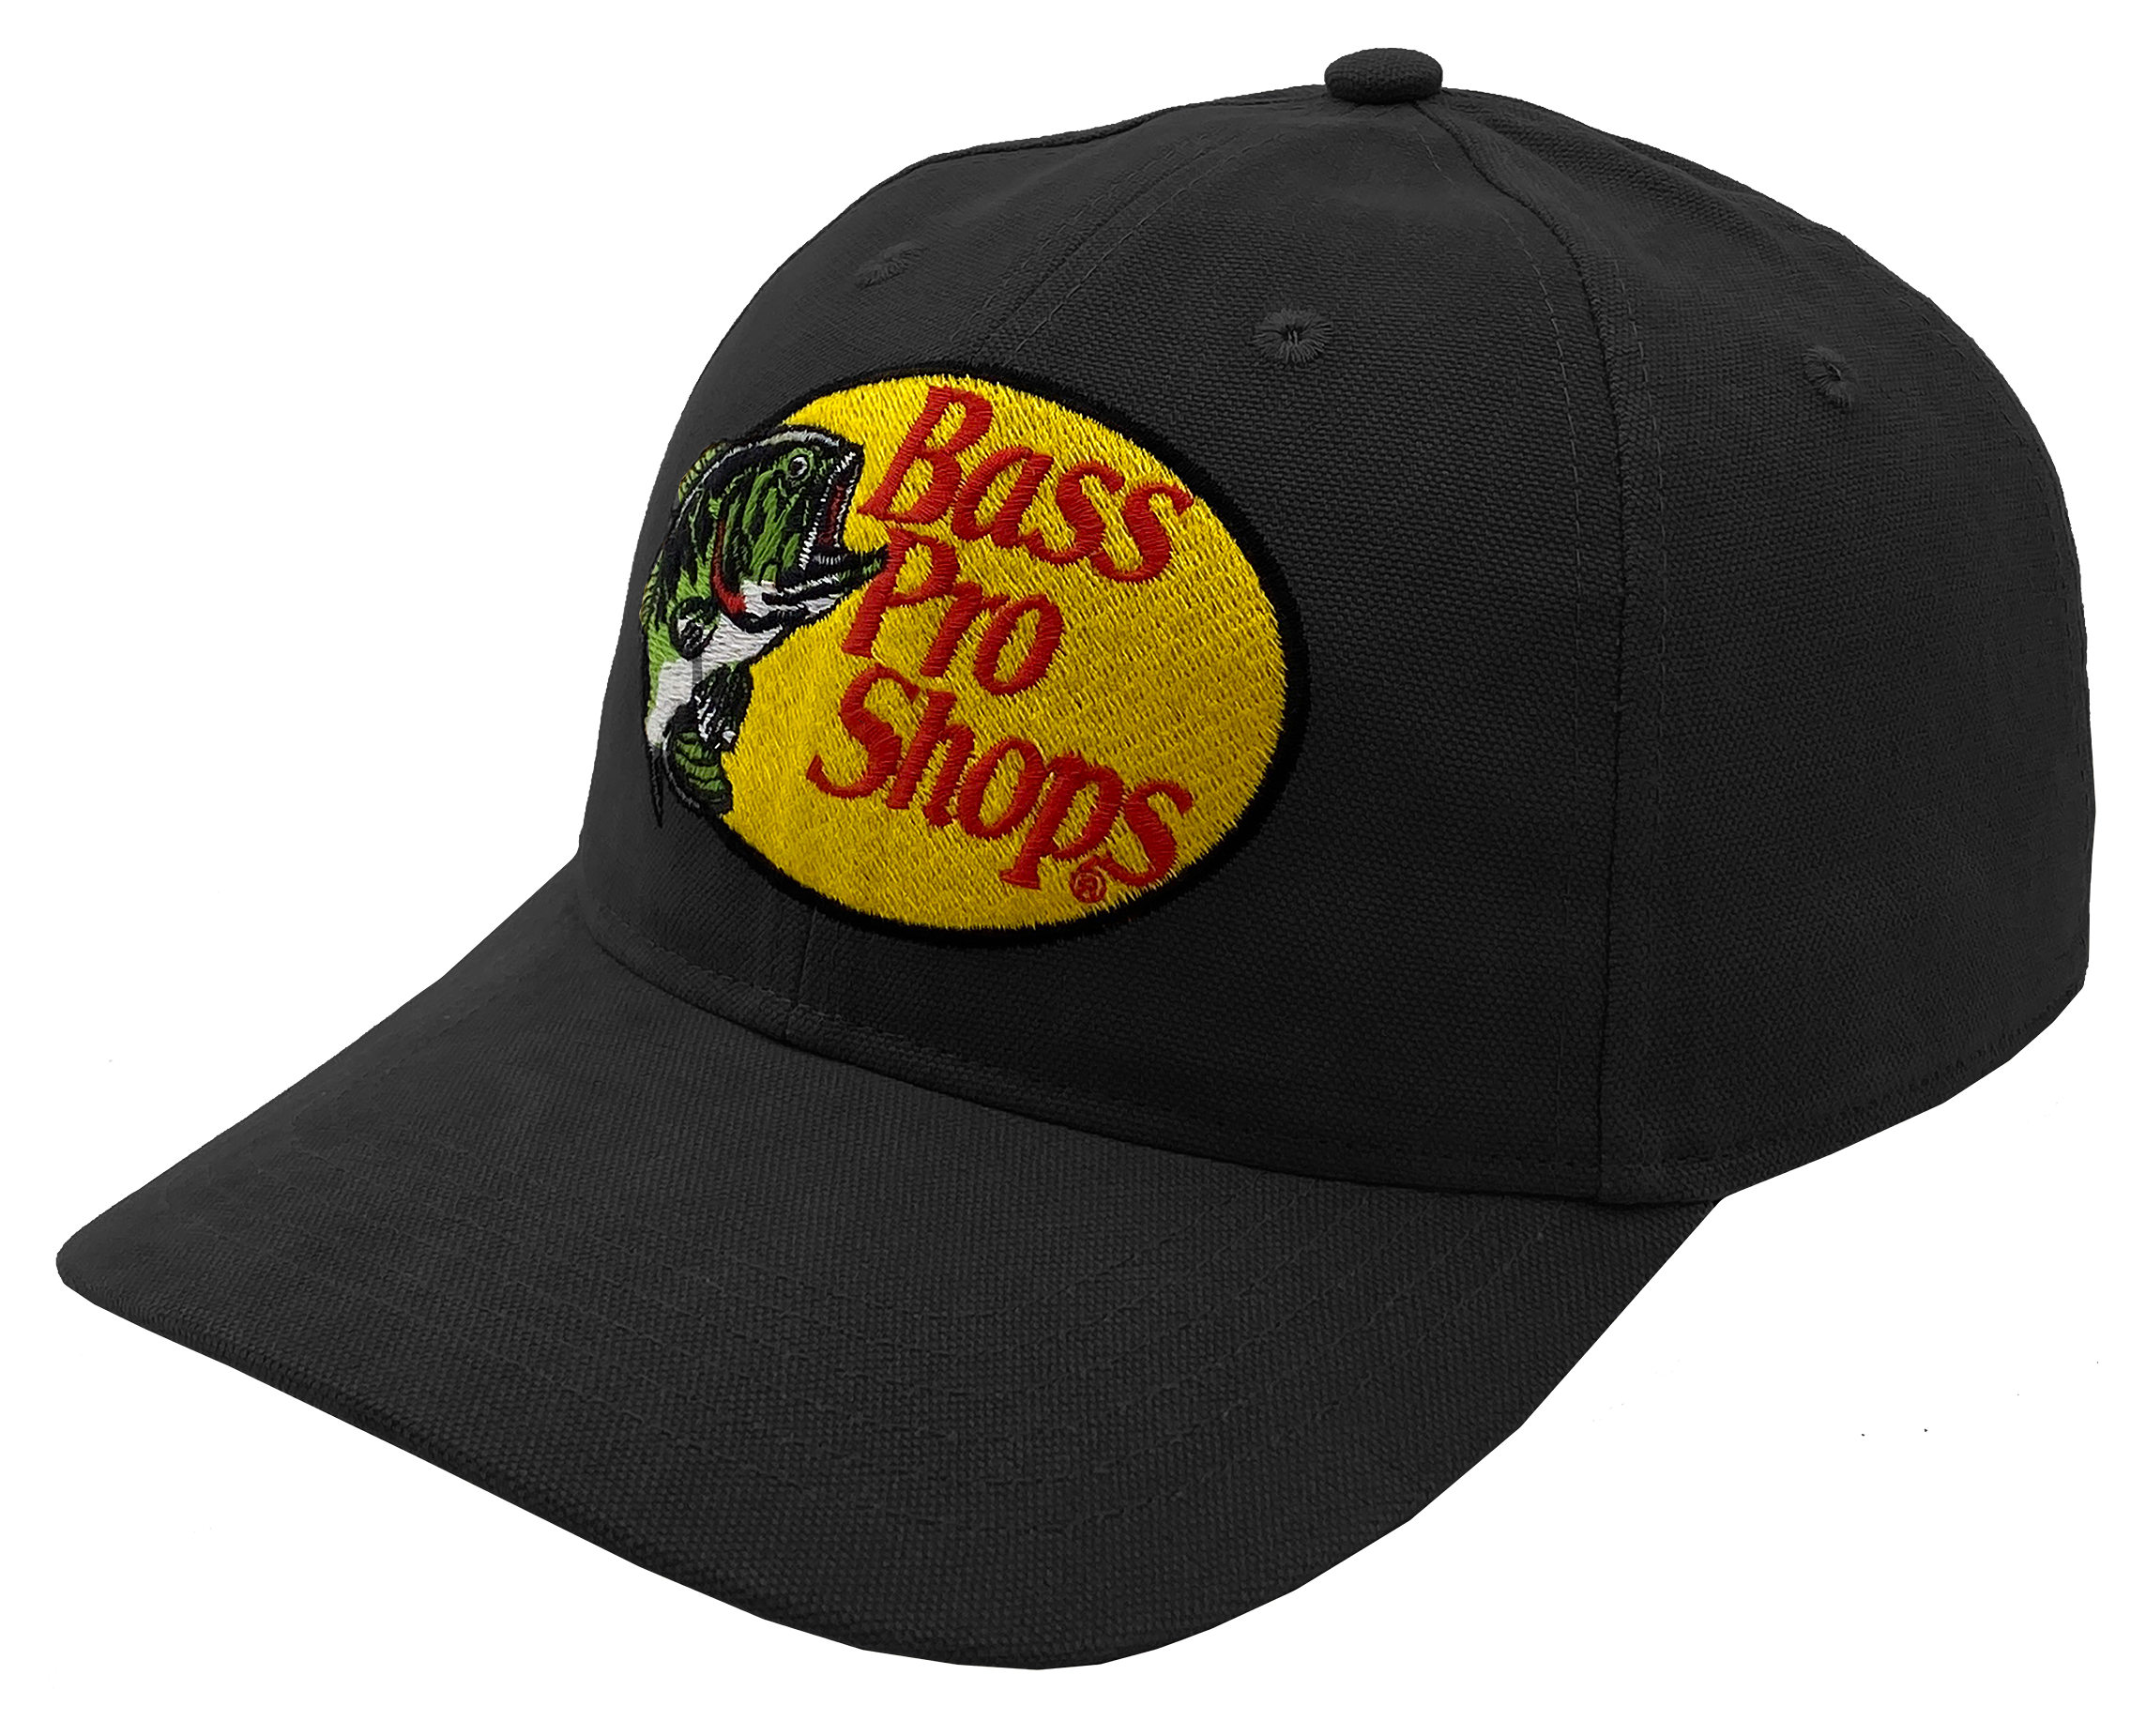 Bass Pro Shop Olive Green Hat